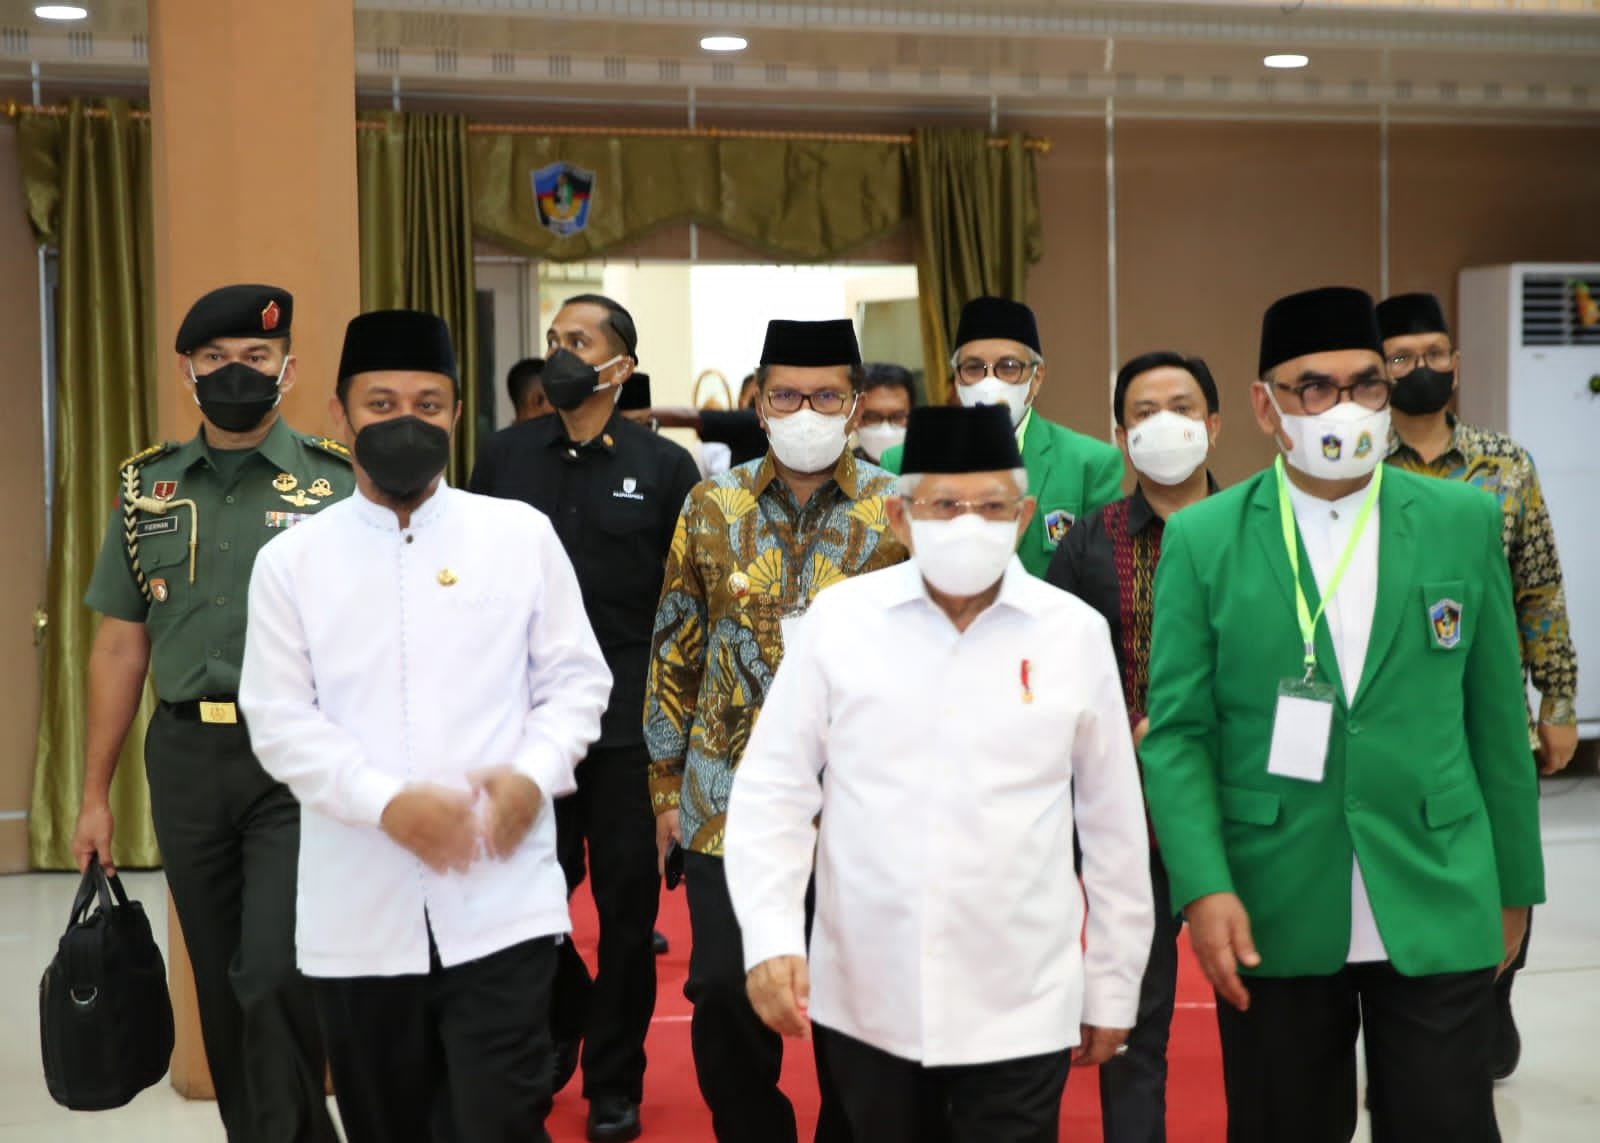 Danny Dampingi Wapres RI Hadiri Silaturahmi Akbar Pemerintah dan Masyarakat Kota Makassar